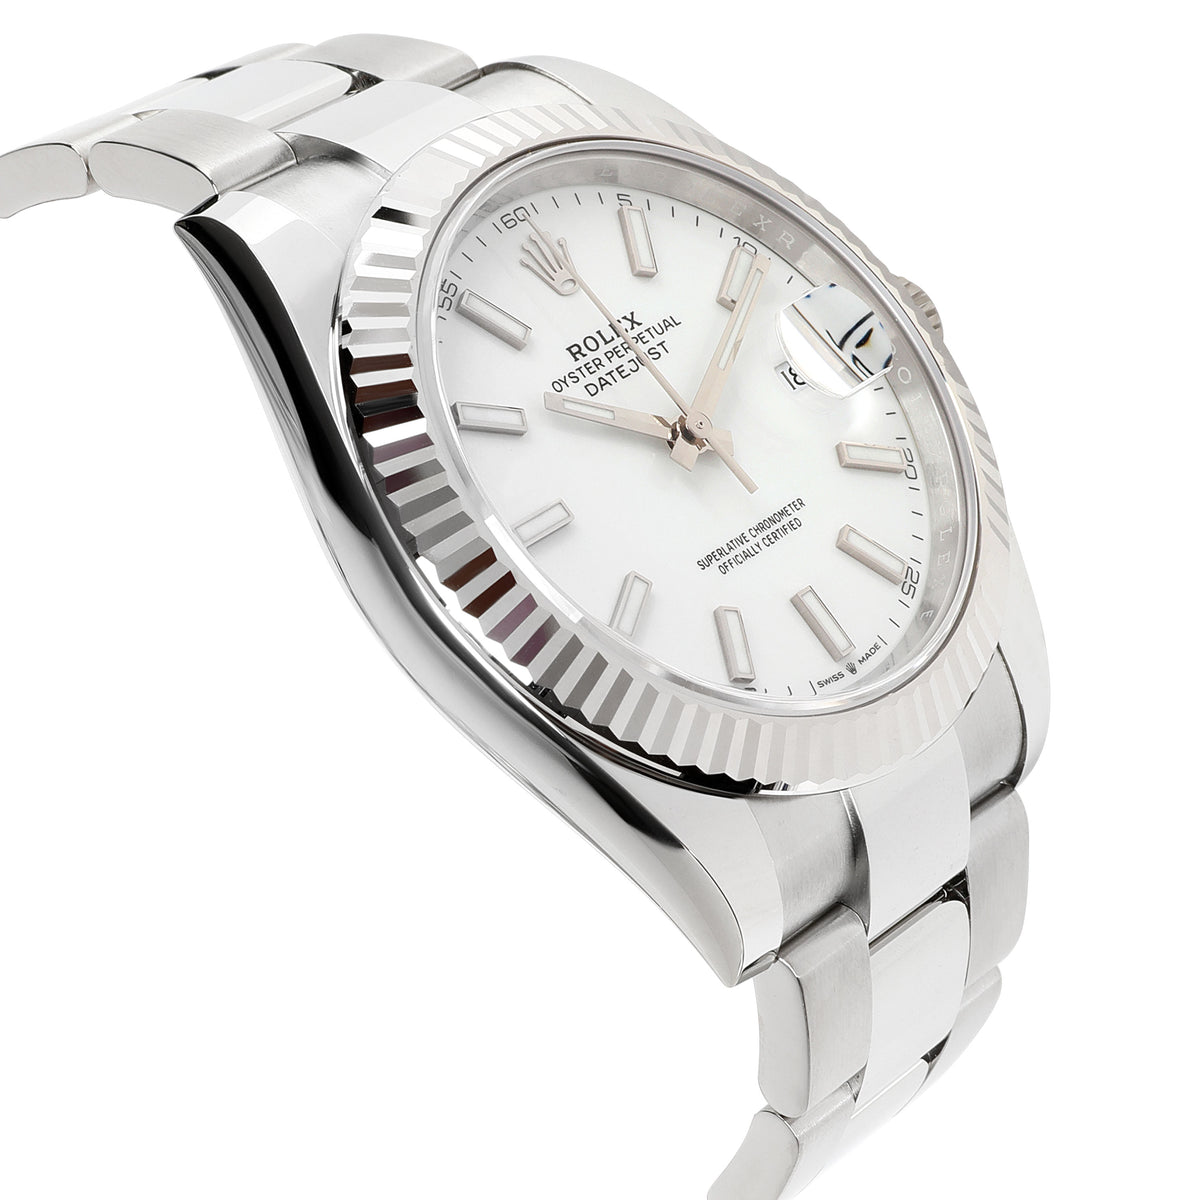 Rolex Datejust 41 126334 Men's Watch in 18kt Stainless Steel/White Gold